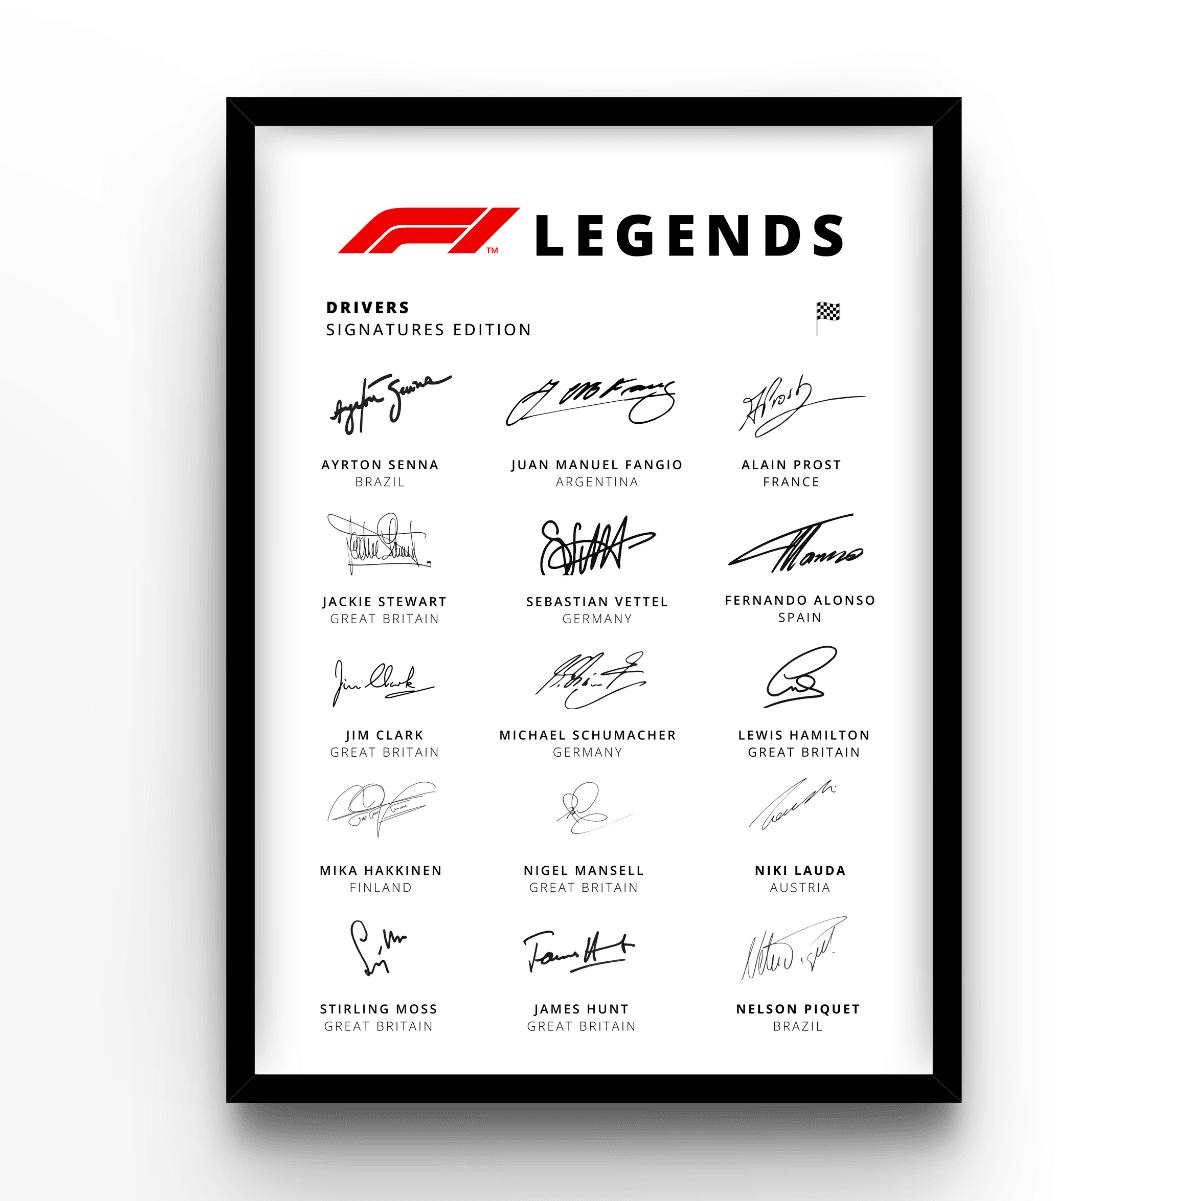 F1 Legends - A4, A3, A2 Posters Base - Poster Print Shop / Art Prints / PostersBase